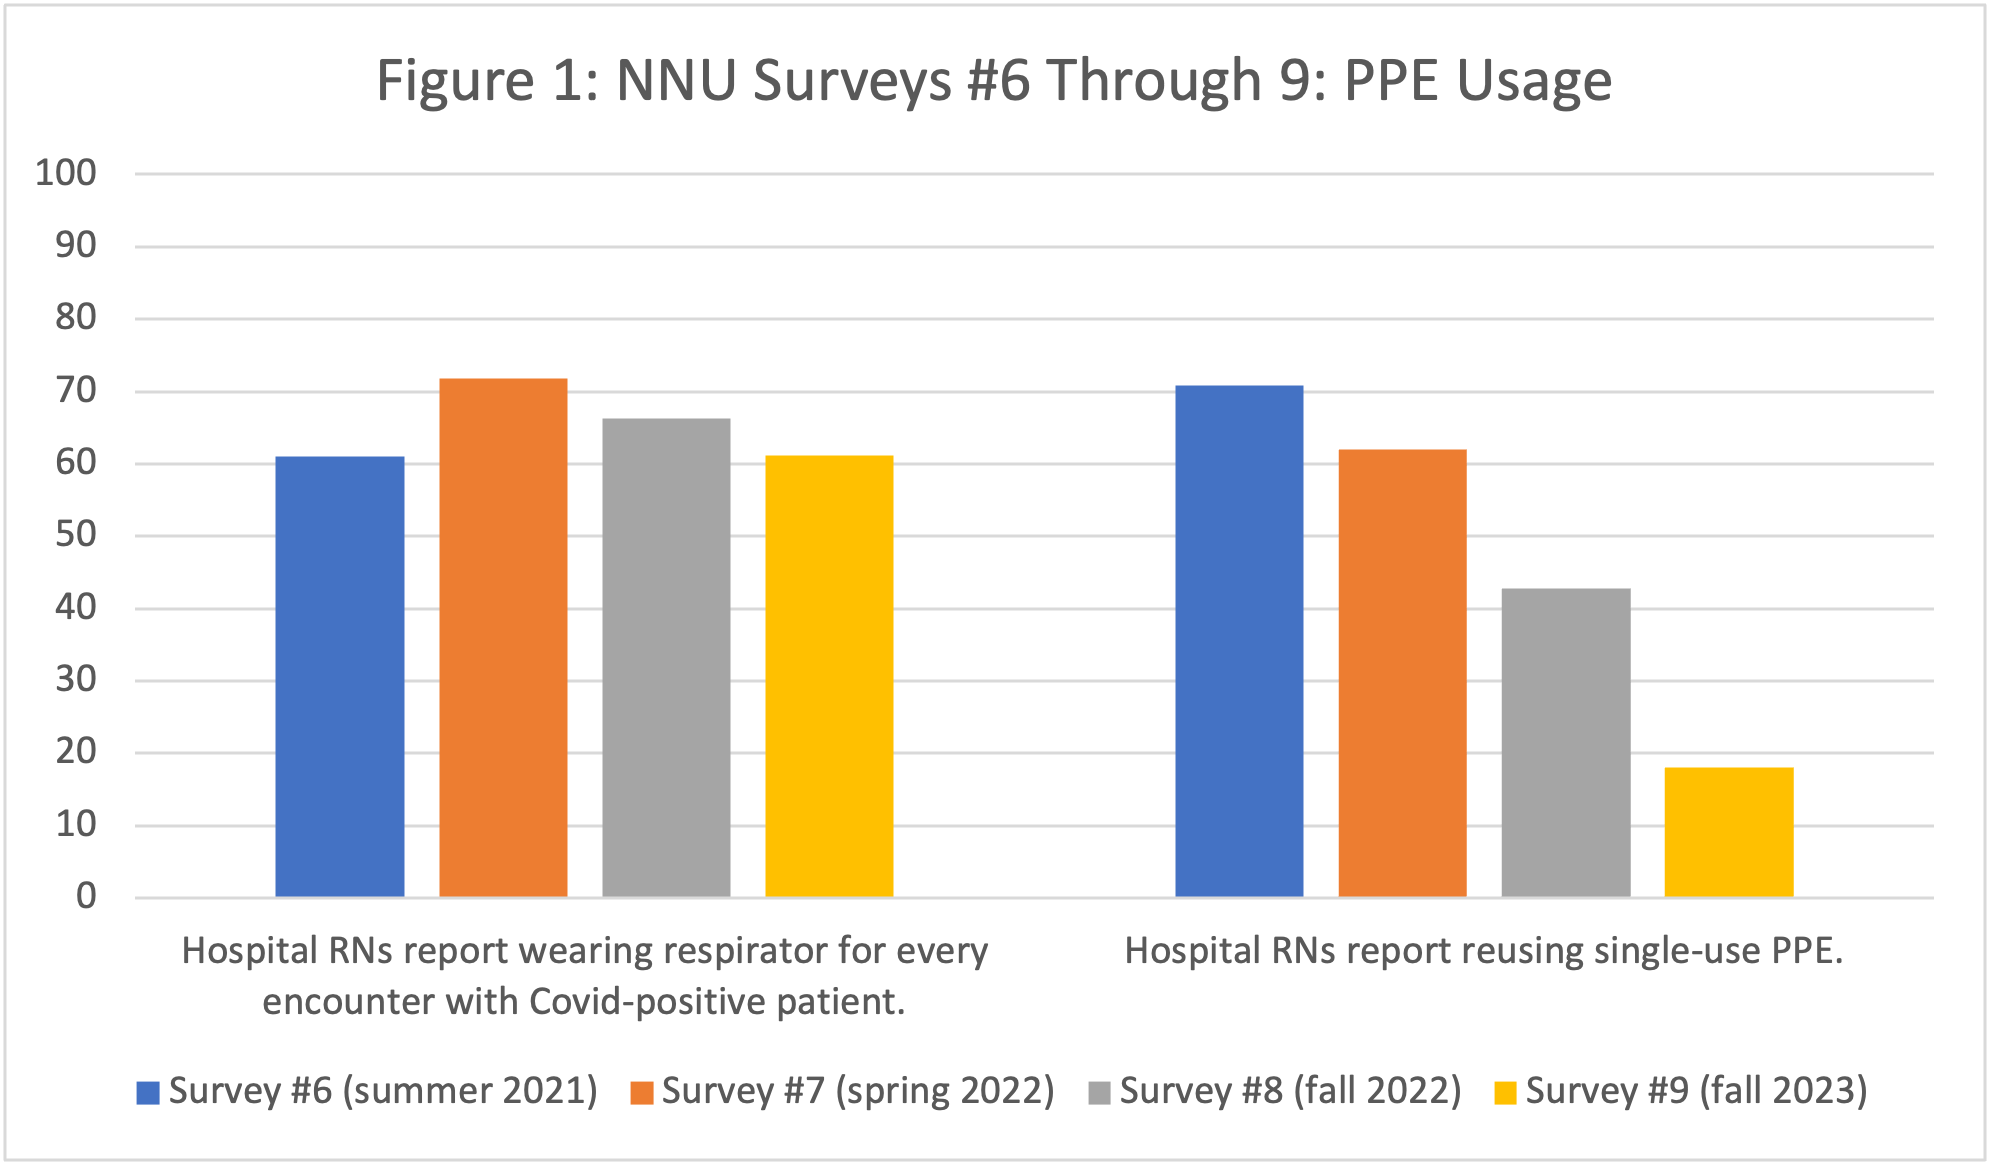 Figure 1: NNU Survey #6 through #9: PPE Usage